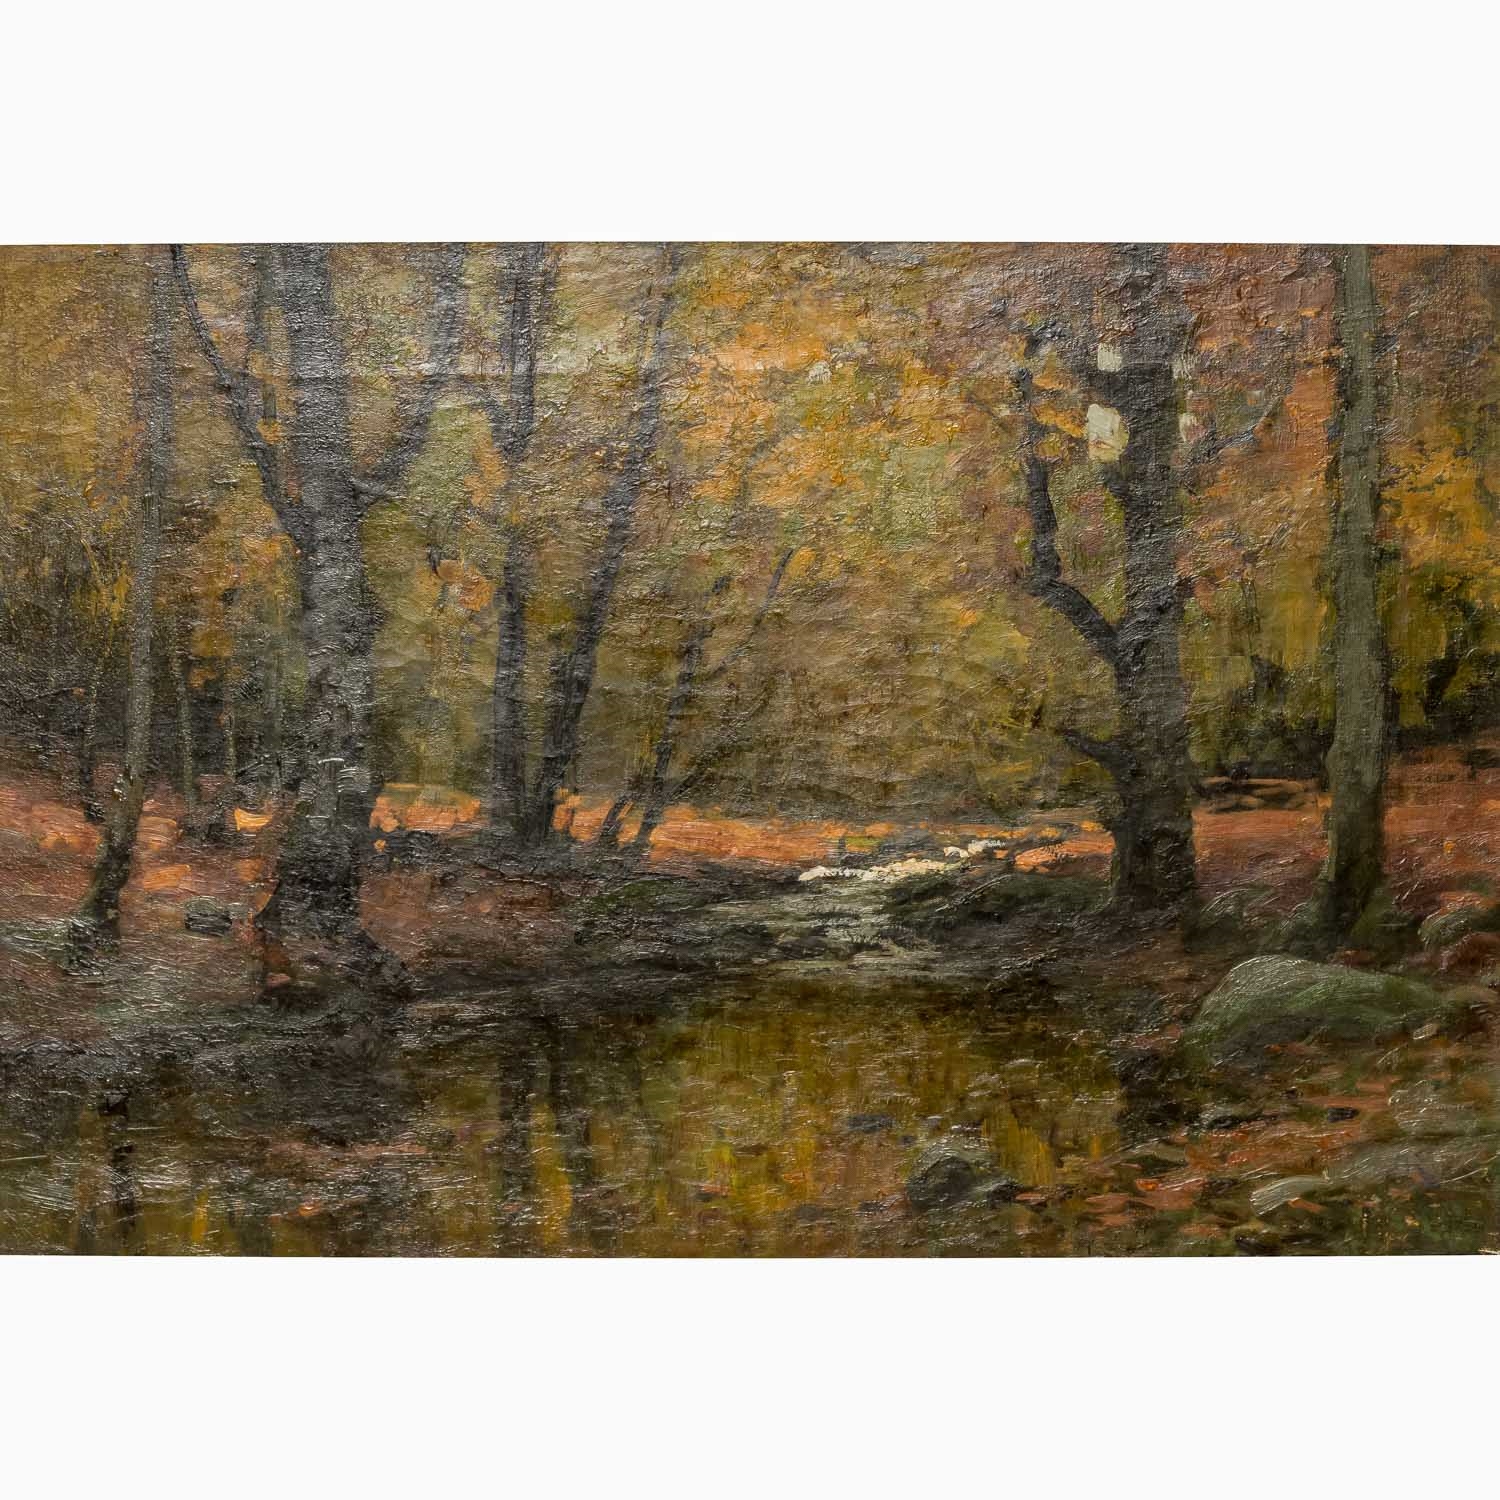 Forest stream in autumn mood by Konrad Alexander Müller-Kurzwelly